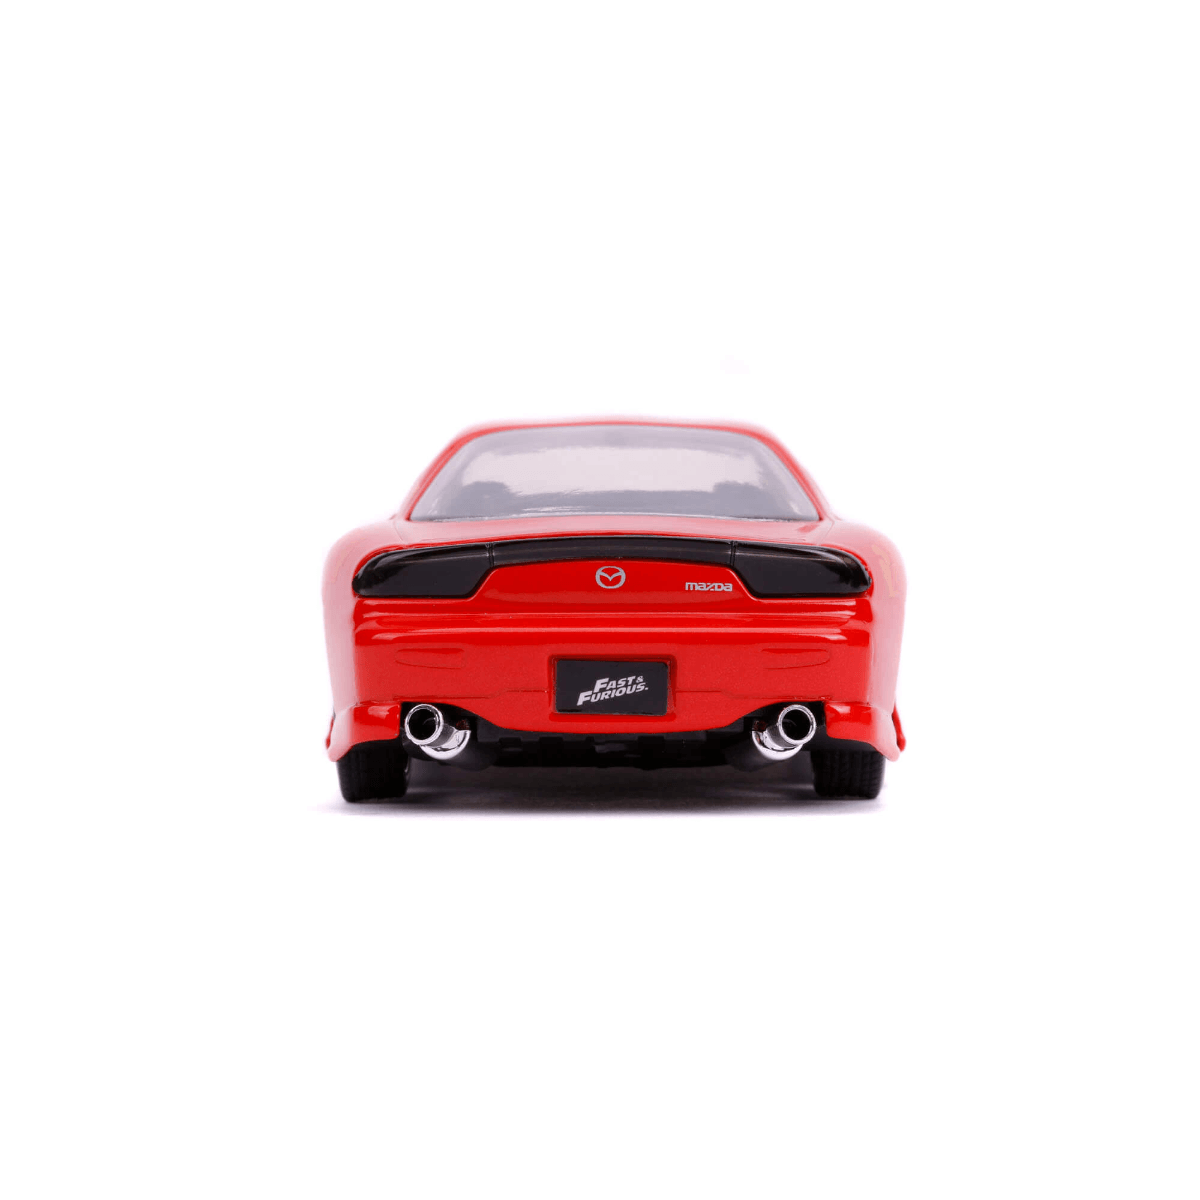 JAD31442 Fast and Furious - 1993 Mazda RX-7 1:32 Scale Hollywood Ride - Jada Toys - Titan Pop Culture